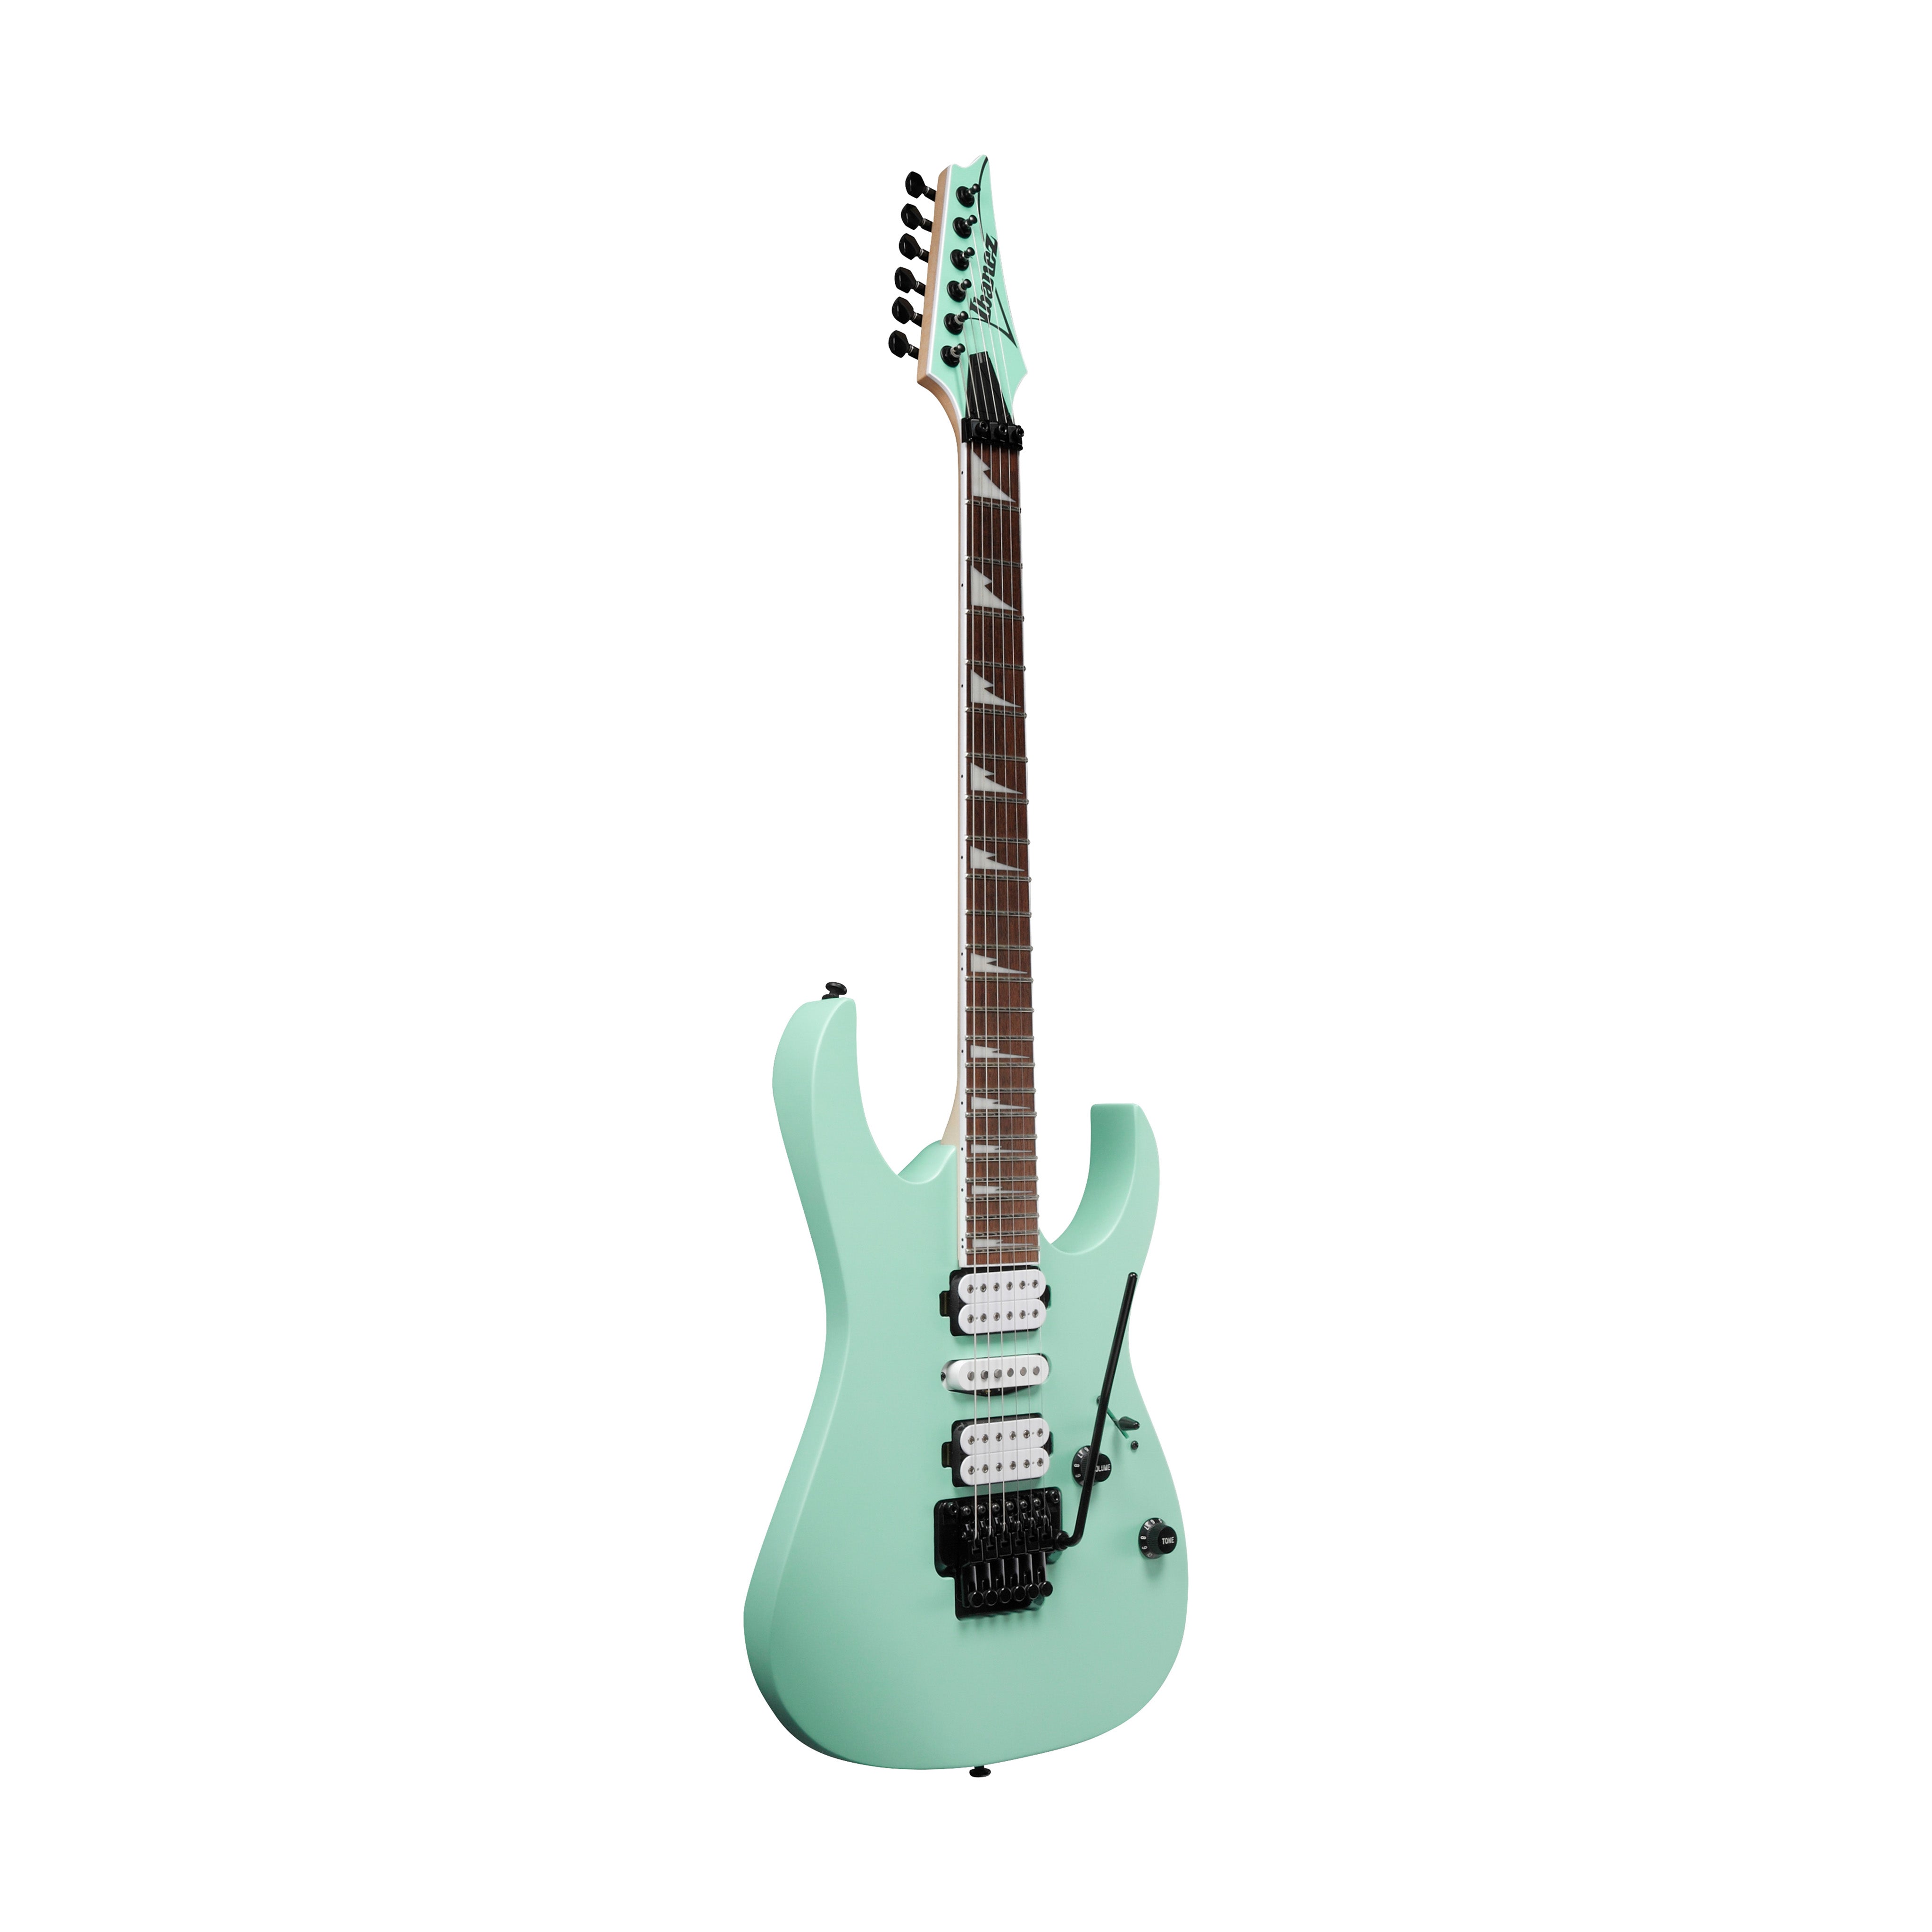 Ibanez RG470DX-SFM Electric Guitar, Sea Foam Green Matte